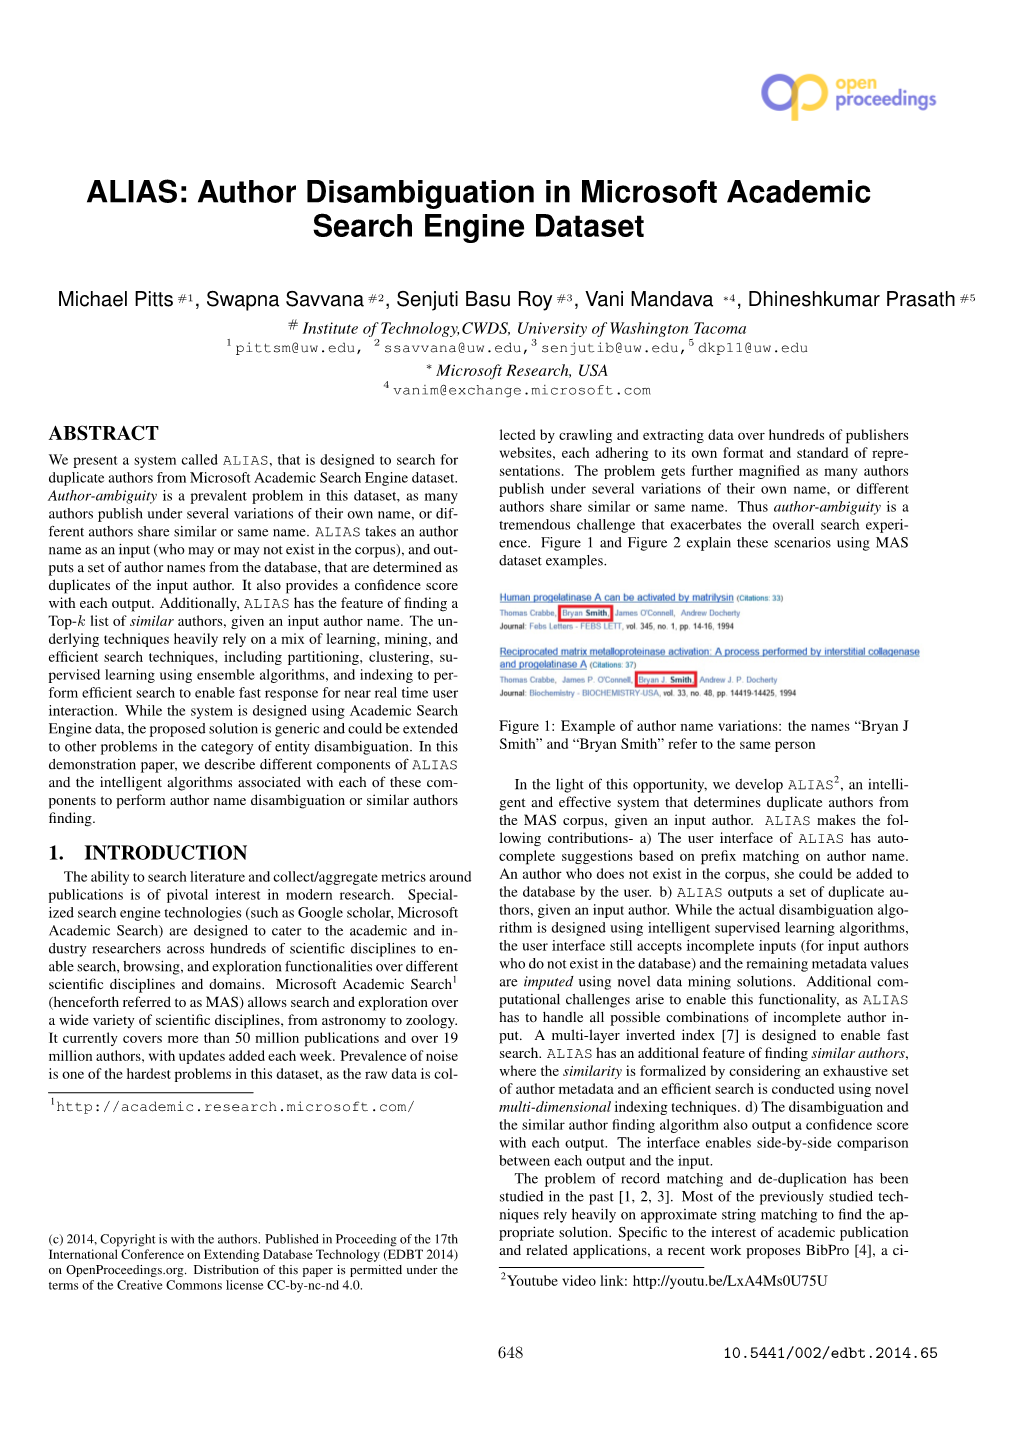 Author Disambiguation in Microsoft Academic Search Engine Dataset